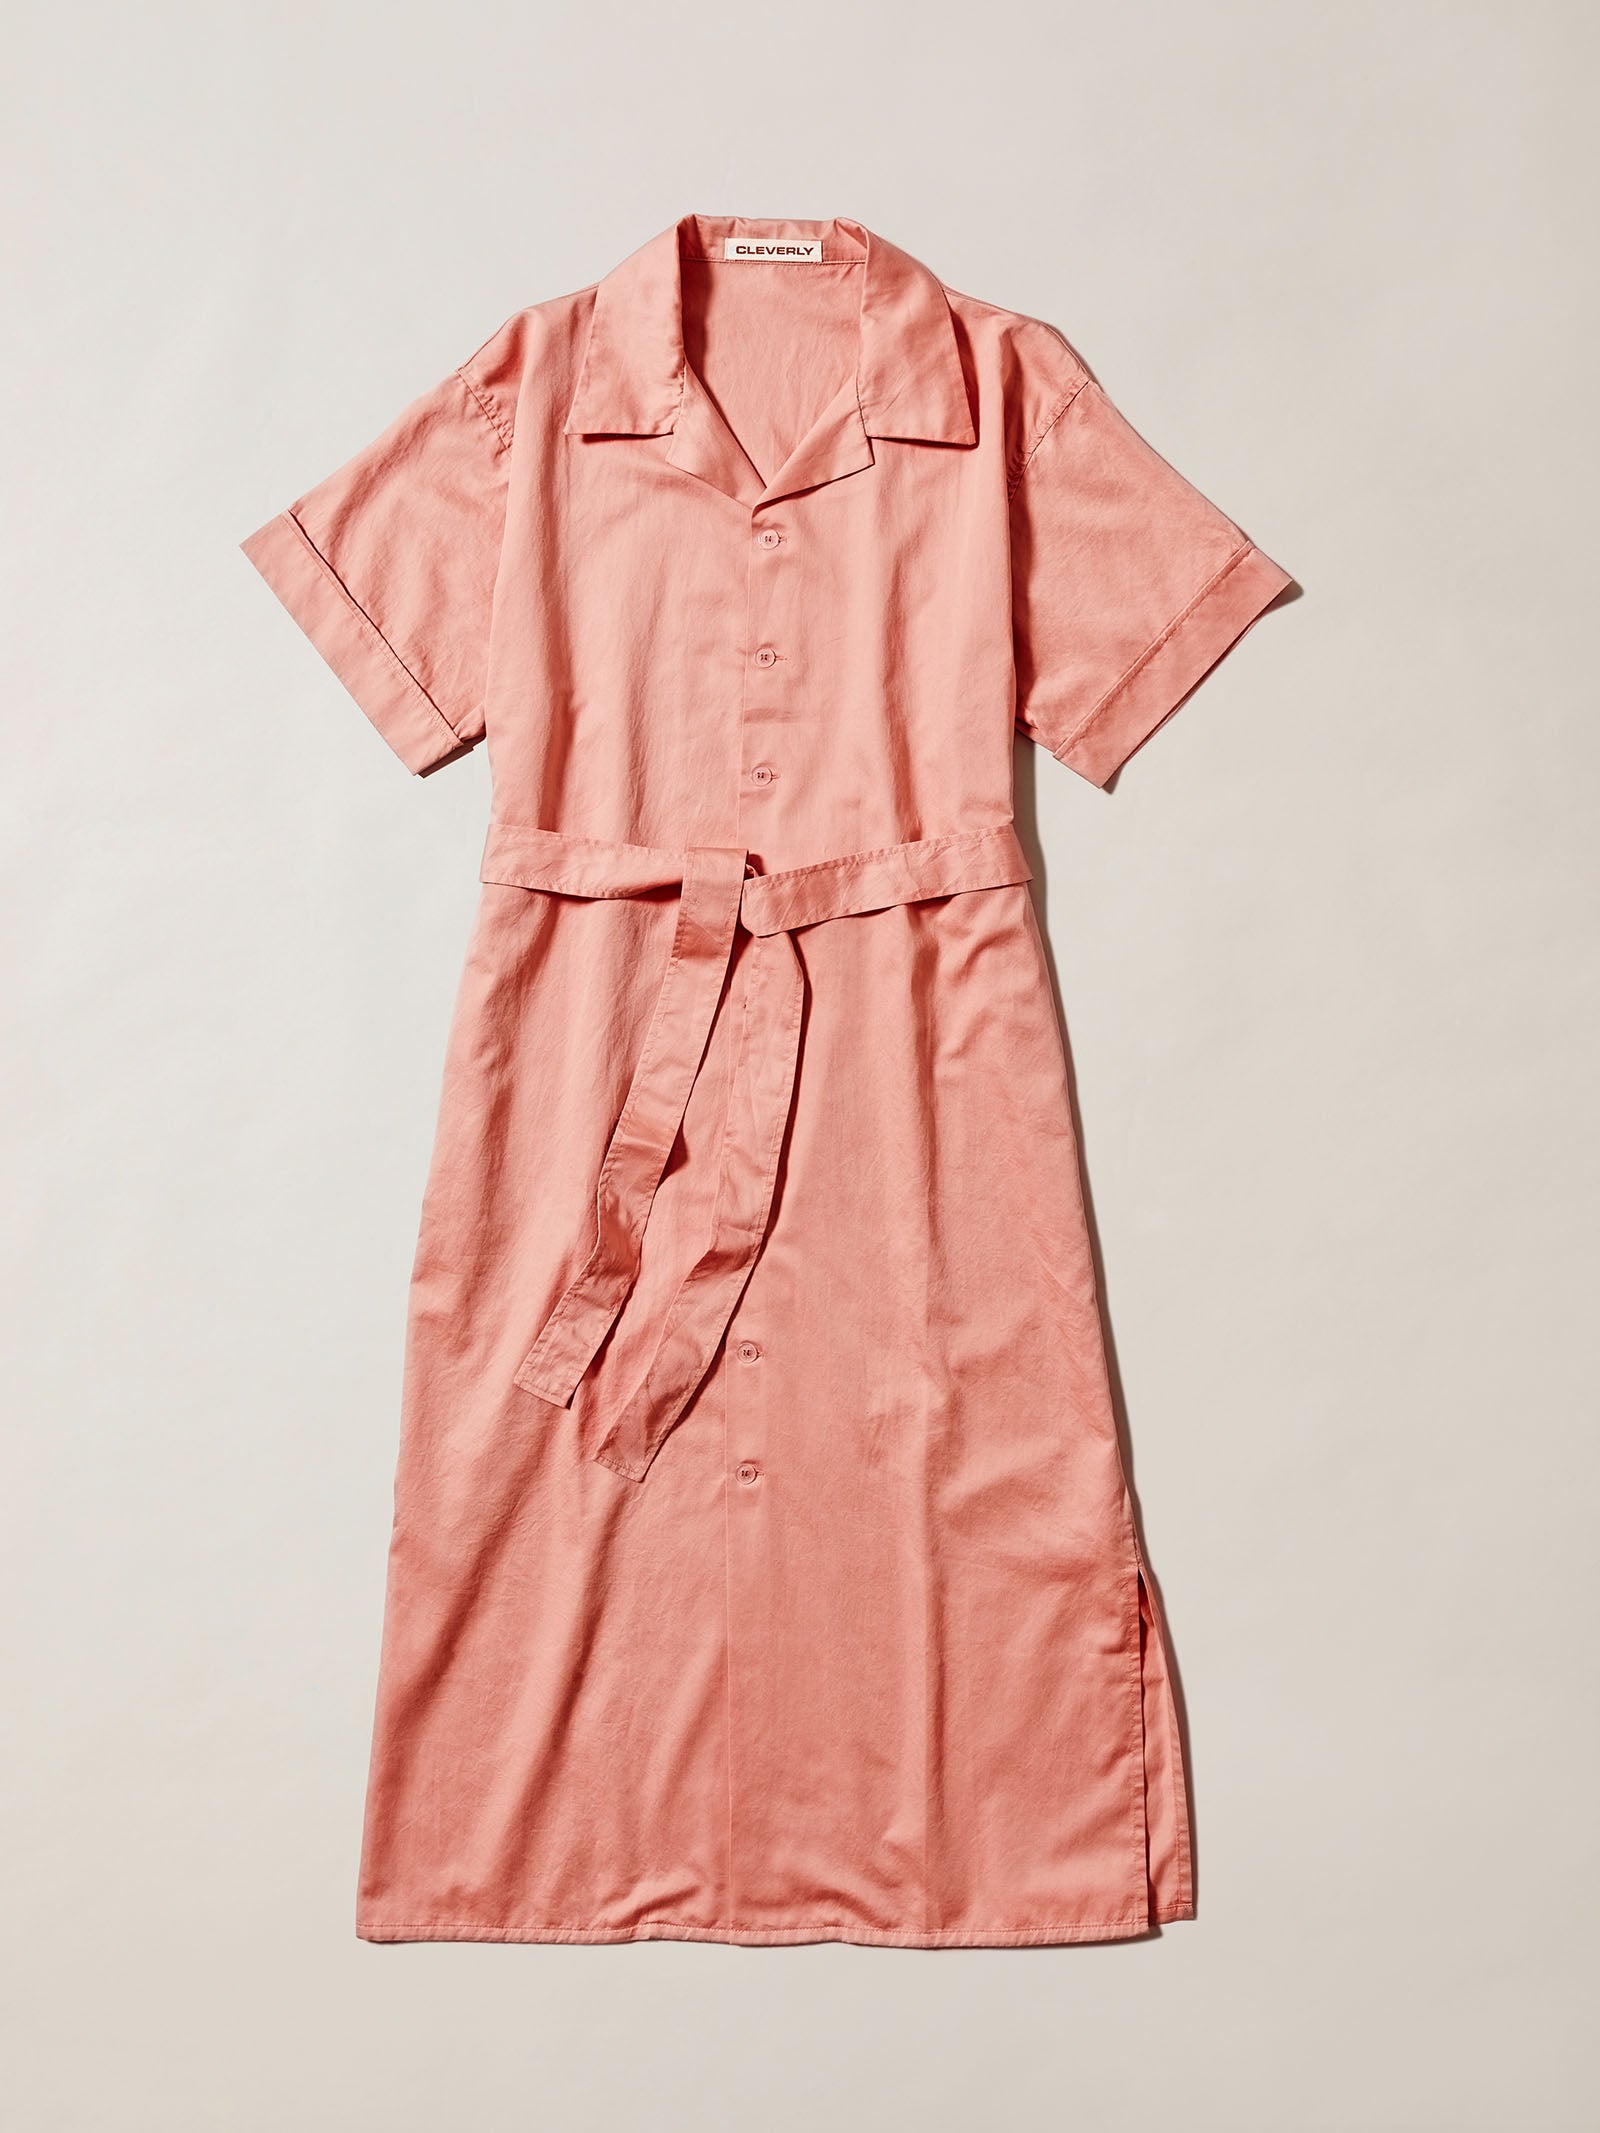 100% cotton, pink button down long shirt dress, casual maxi dress or luxury cotton nightwear, short sleeves